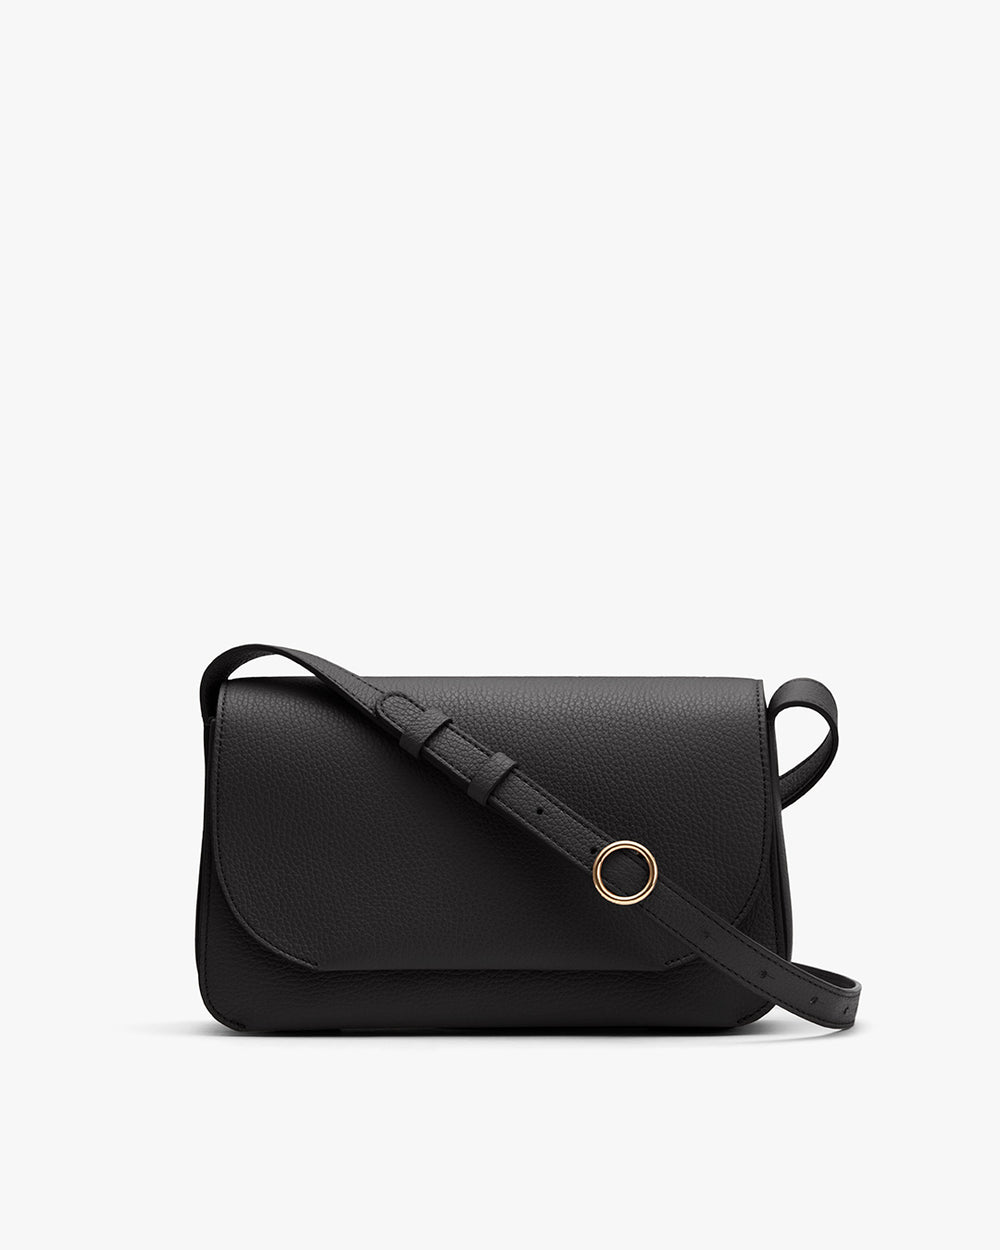 A handbag with an adjustable strap and a circular clasp.